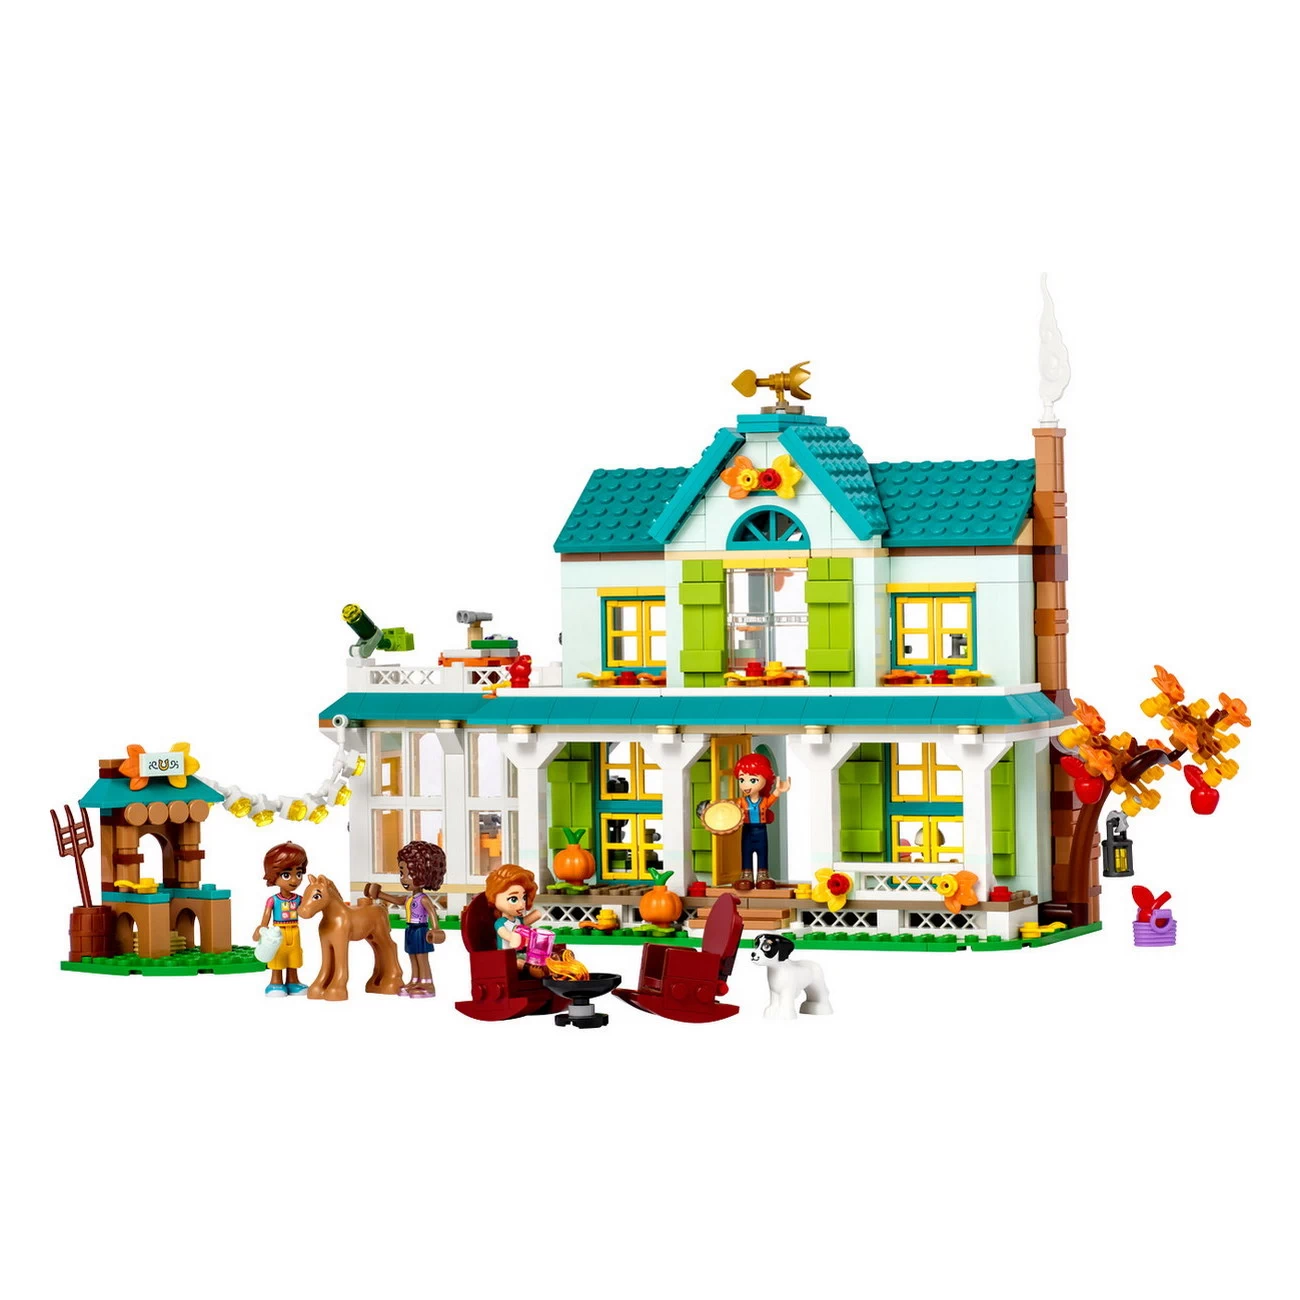 LEGO Friends 41730 - Autumns Haus